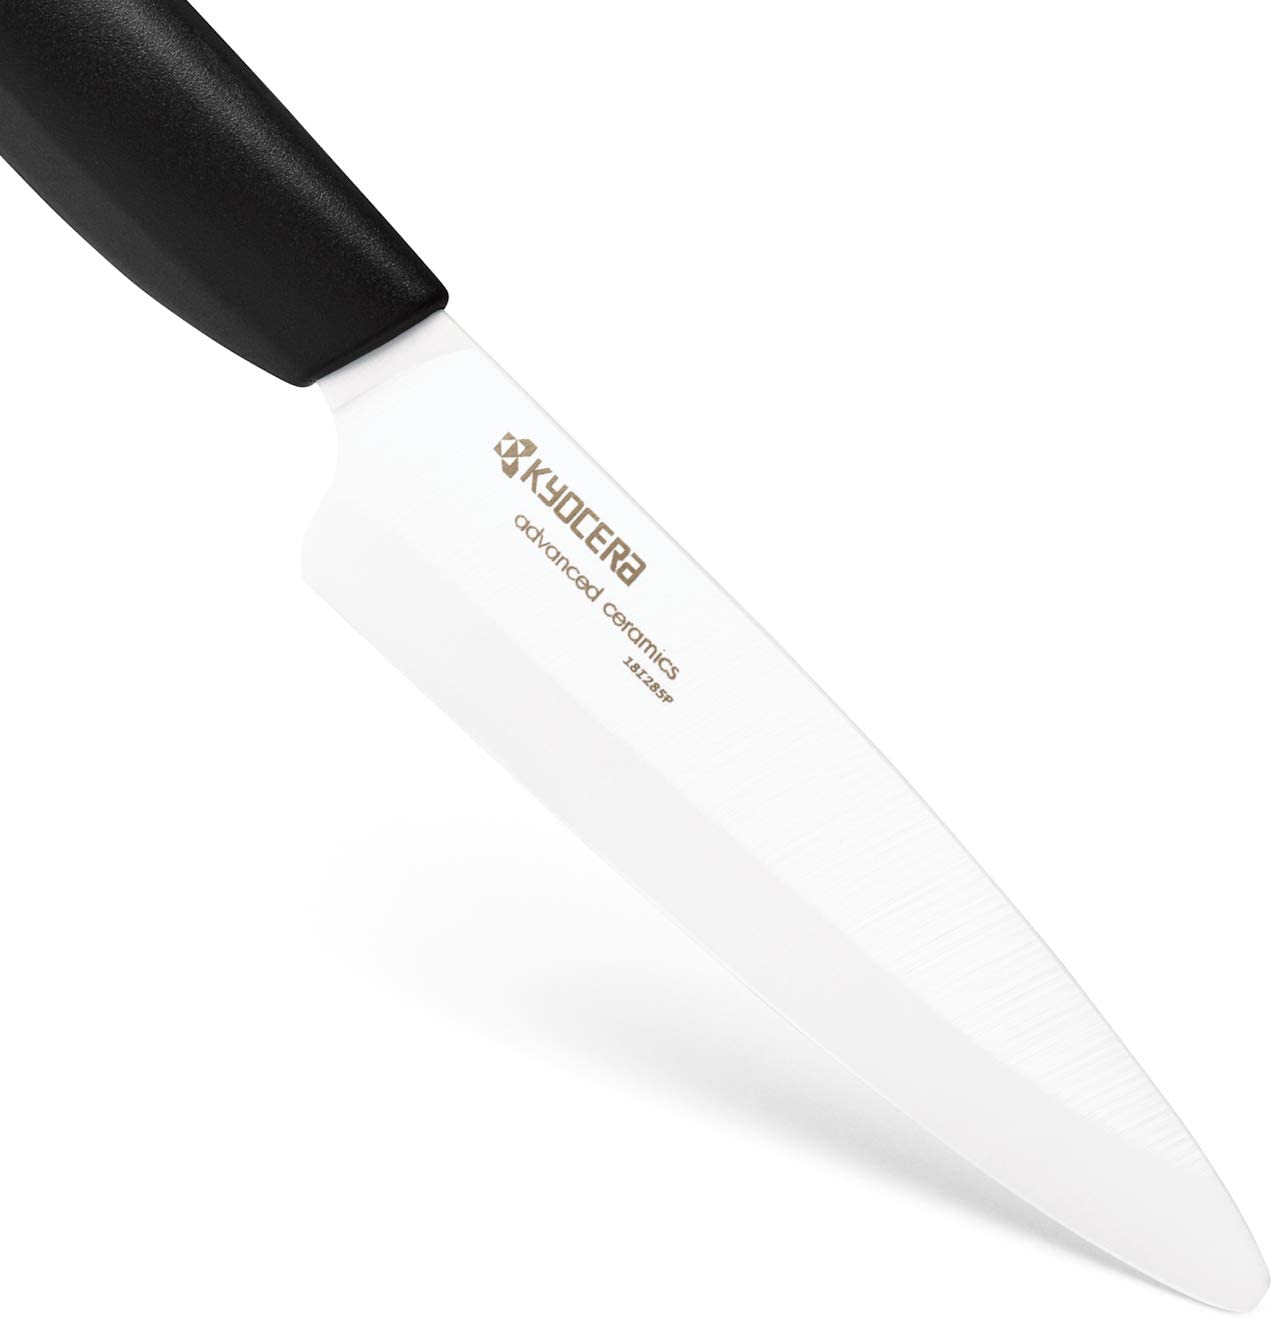 Kyocera Advanced Ceramic Revolution Series 4.5-inch Utility Knife – Black